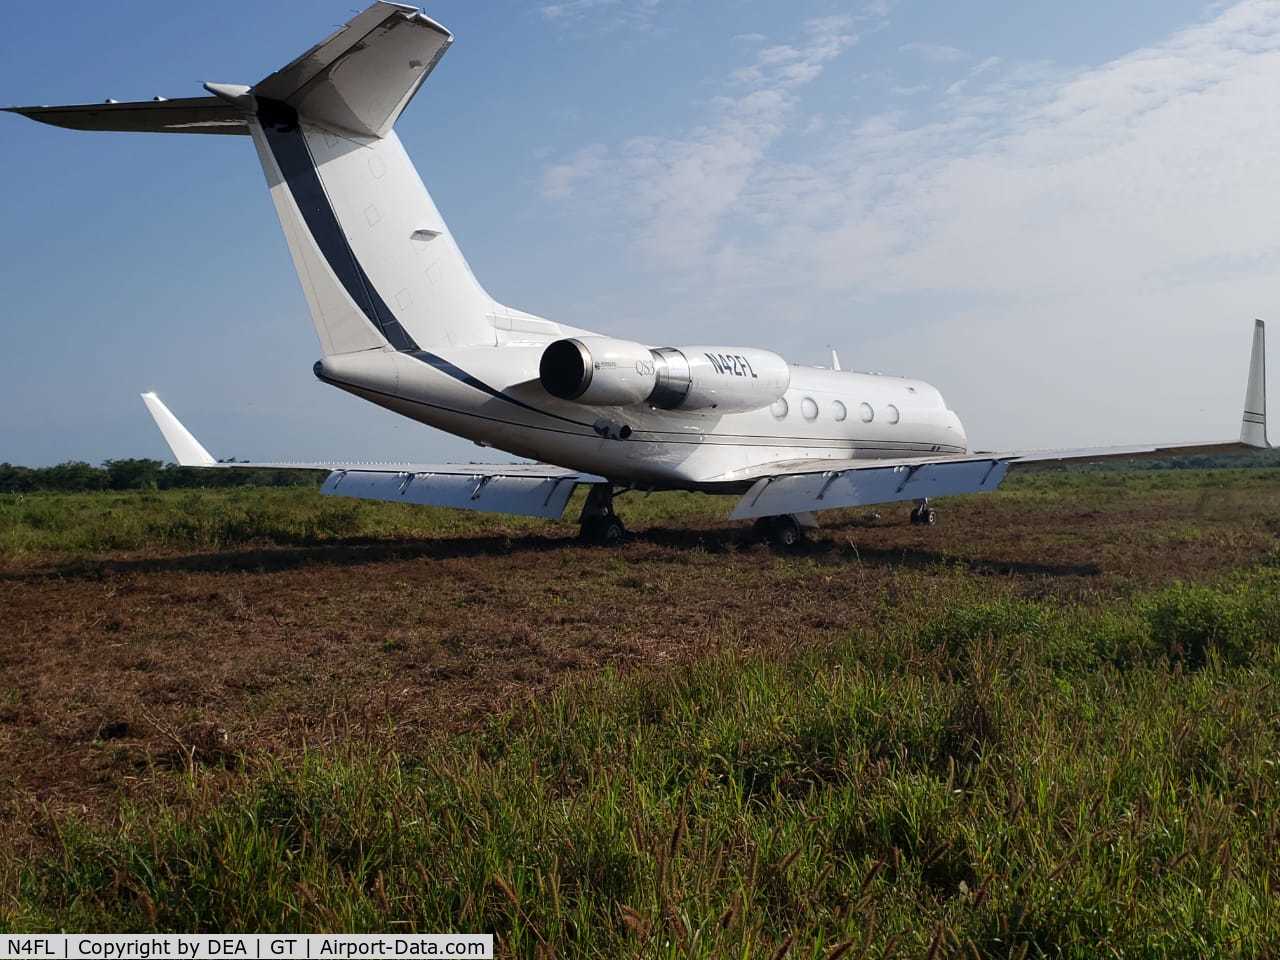 N4FL, 2012 Gulfstream Aerospace G650 (G-VI) C/N 6032, Airplane Abandoned due to drug trafficking.